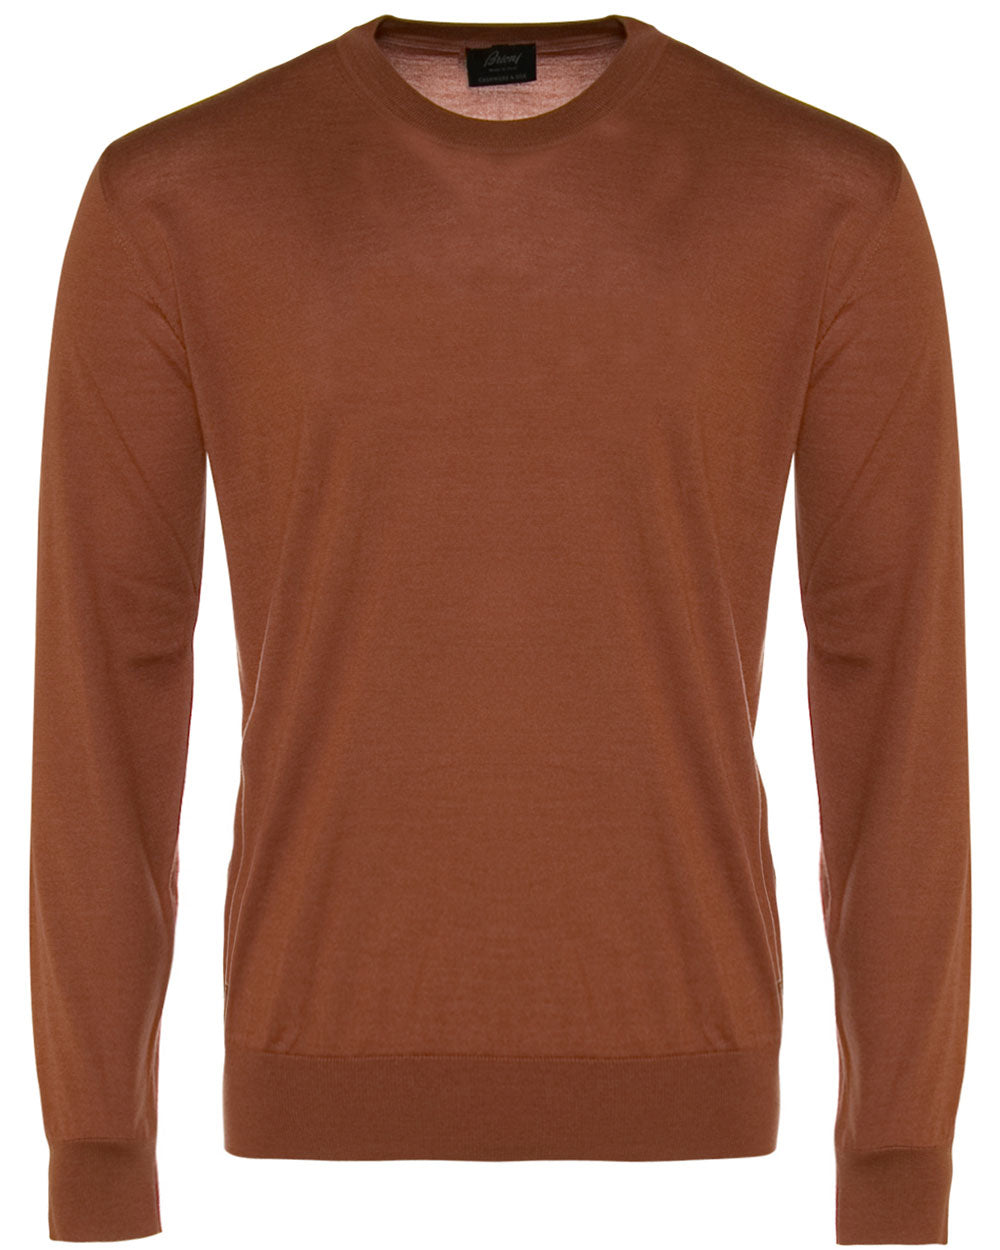 Burnt Orange Lightweight Sweater